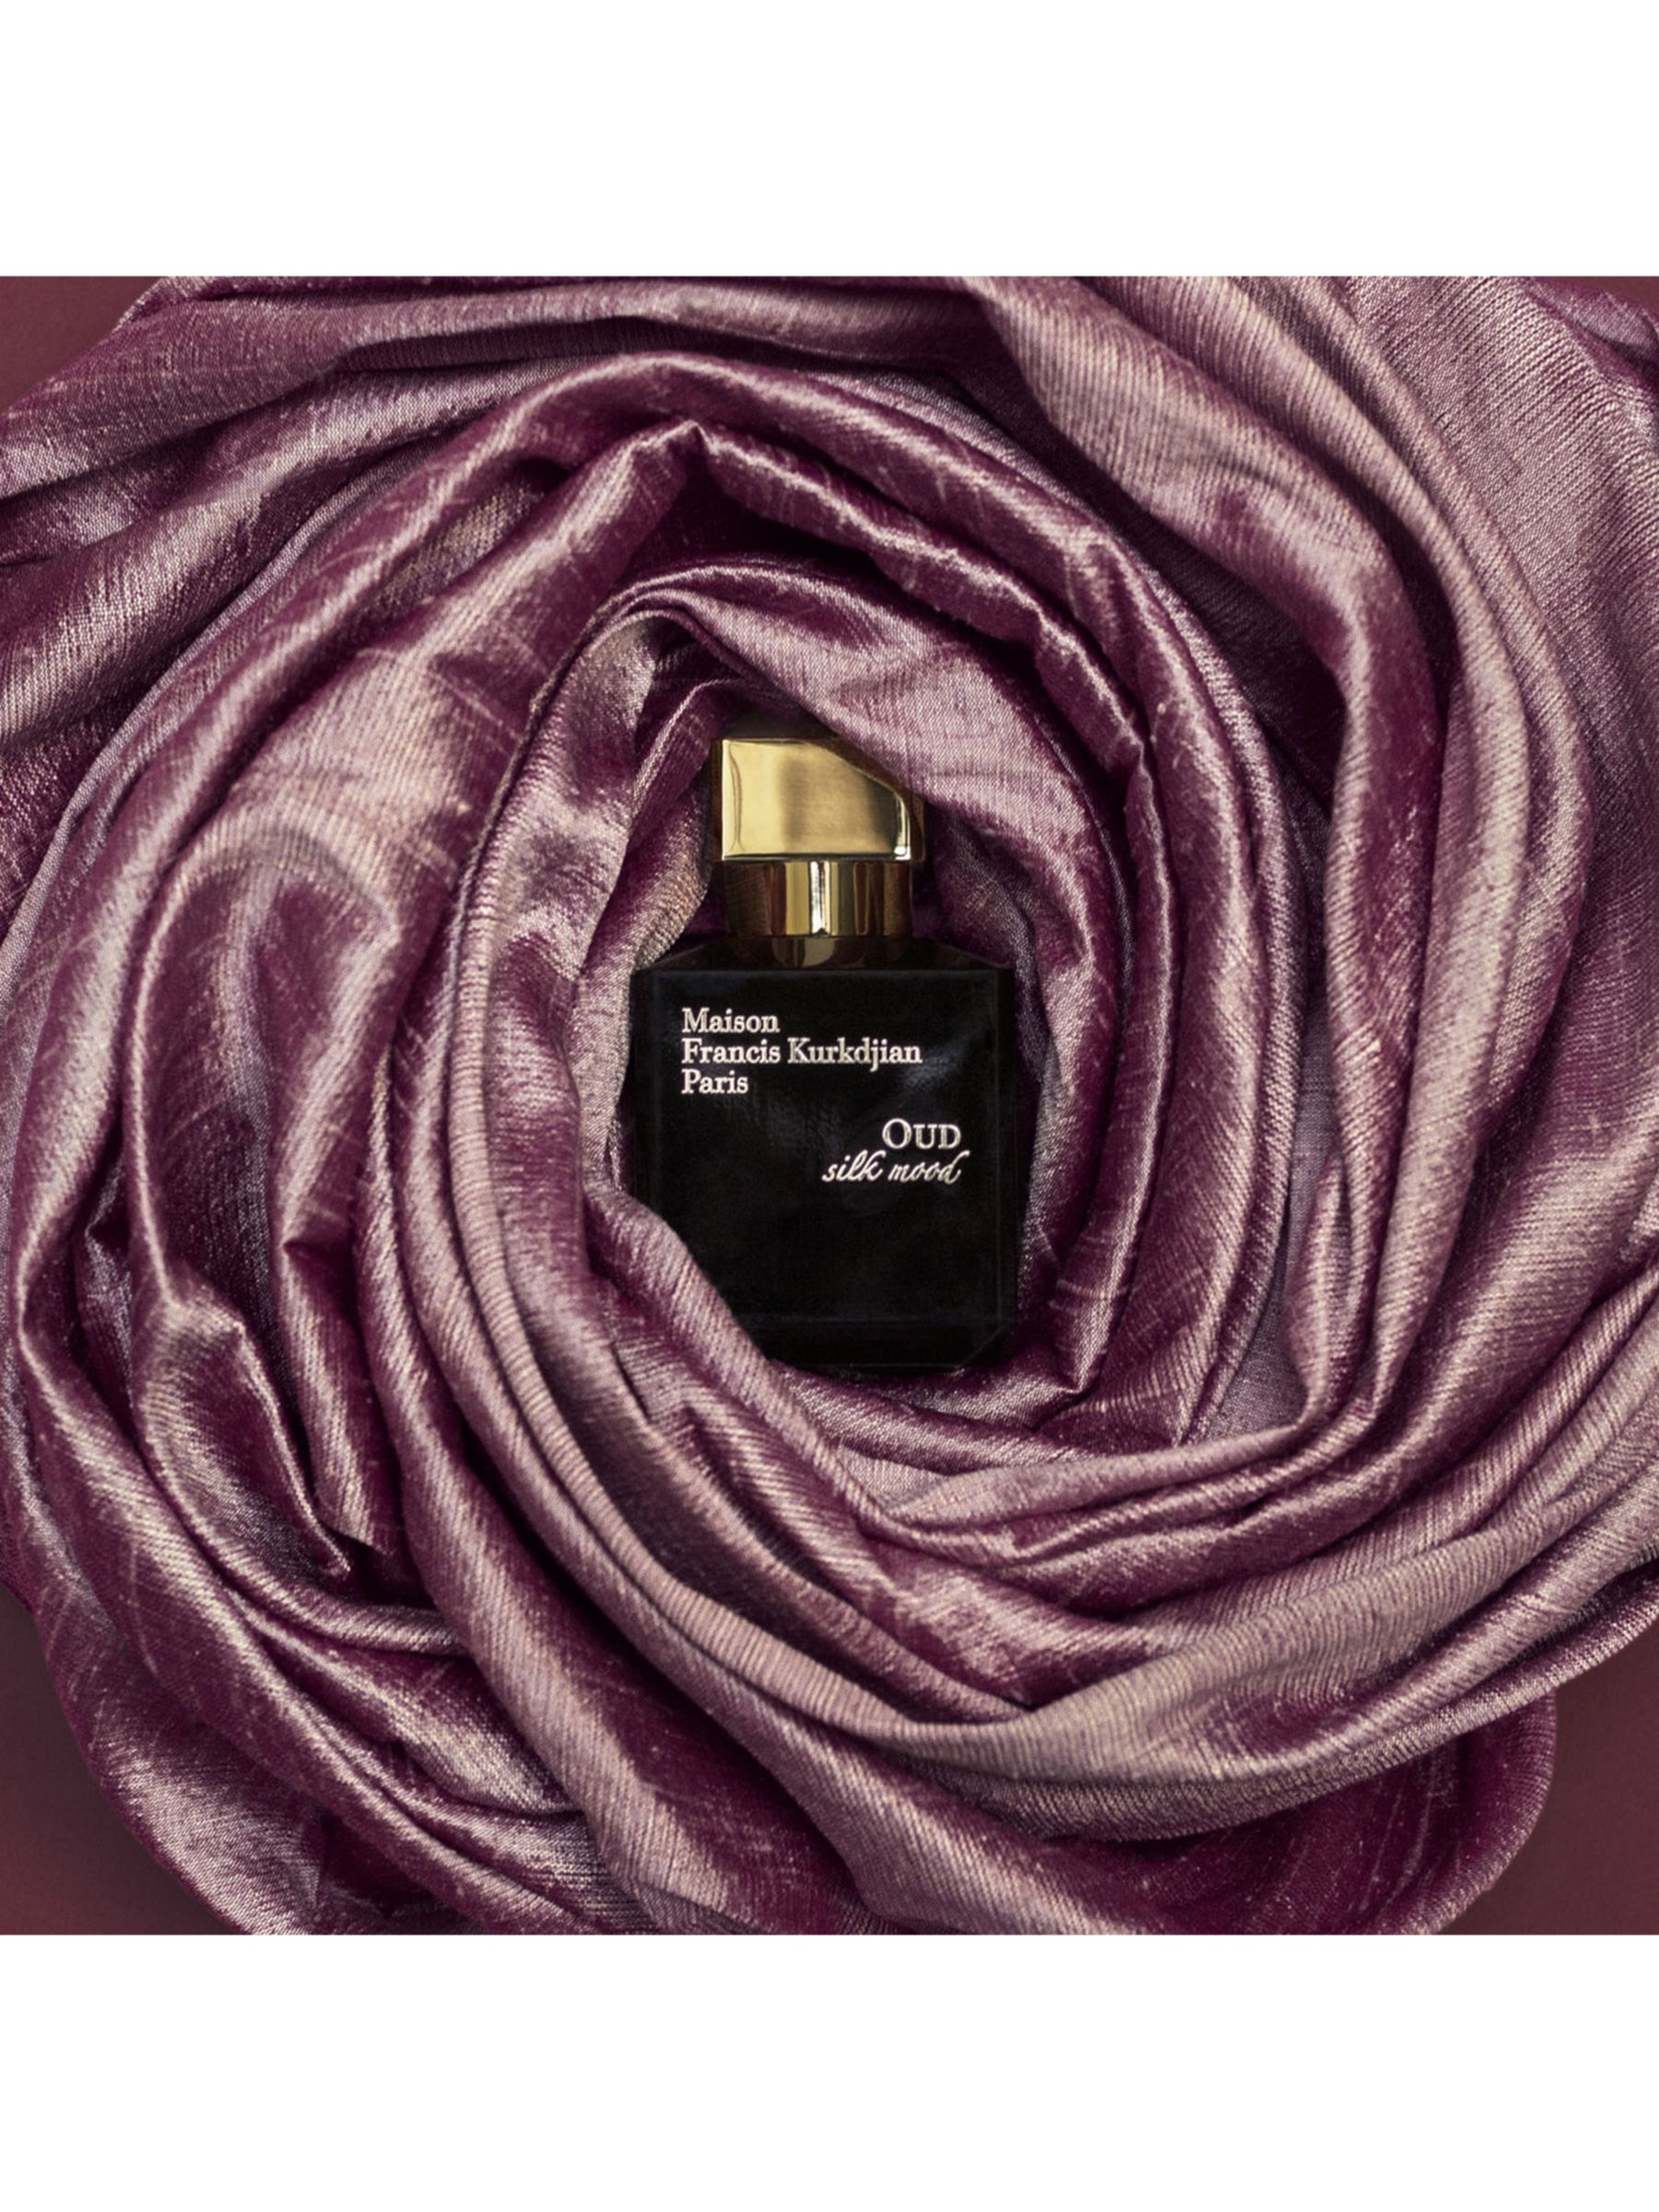 Maison Francis Kurkdjian Oud Silk Mood Eau de Parfum, 70ml 5